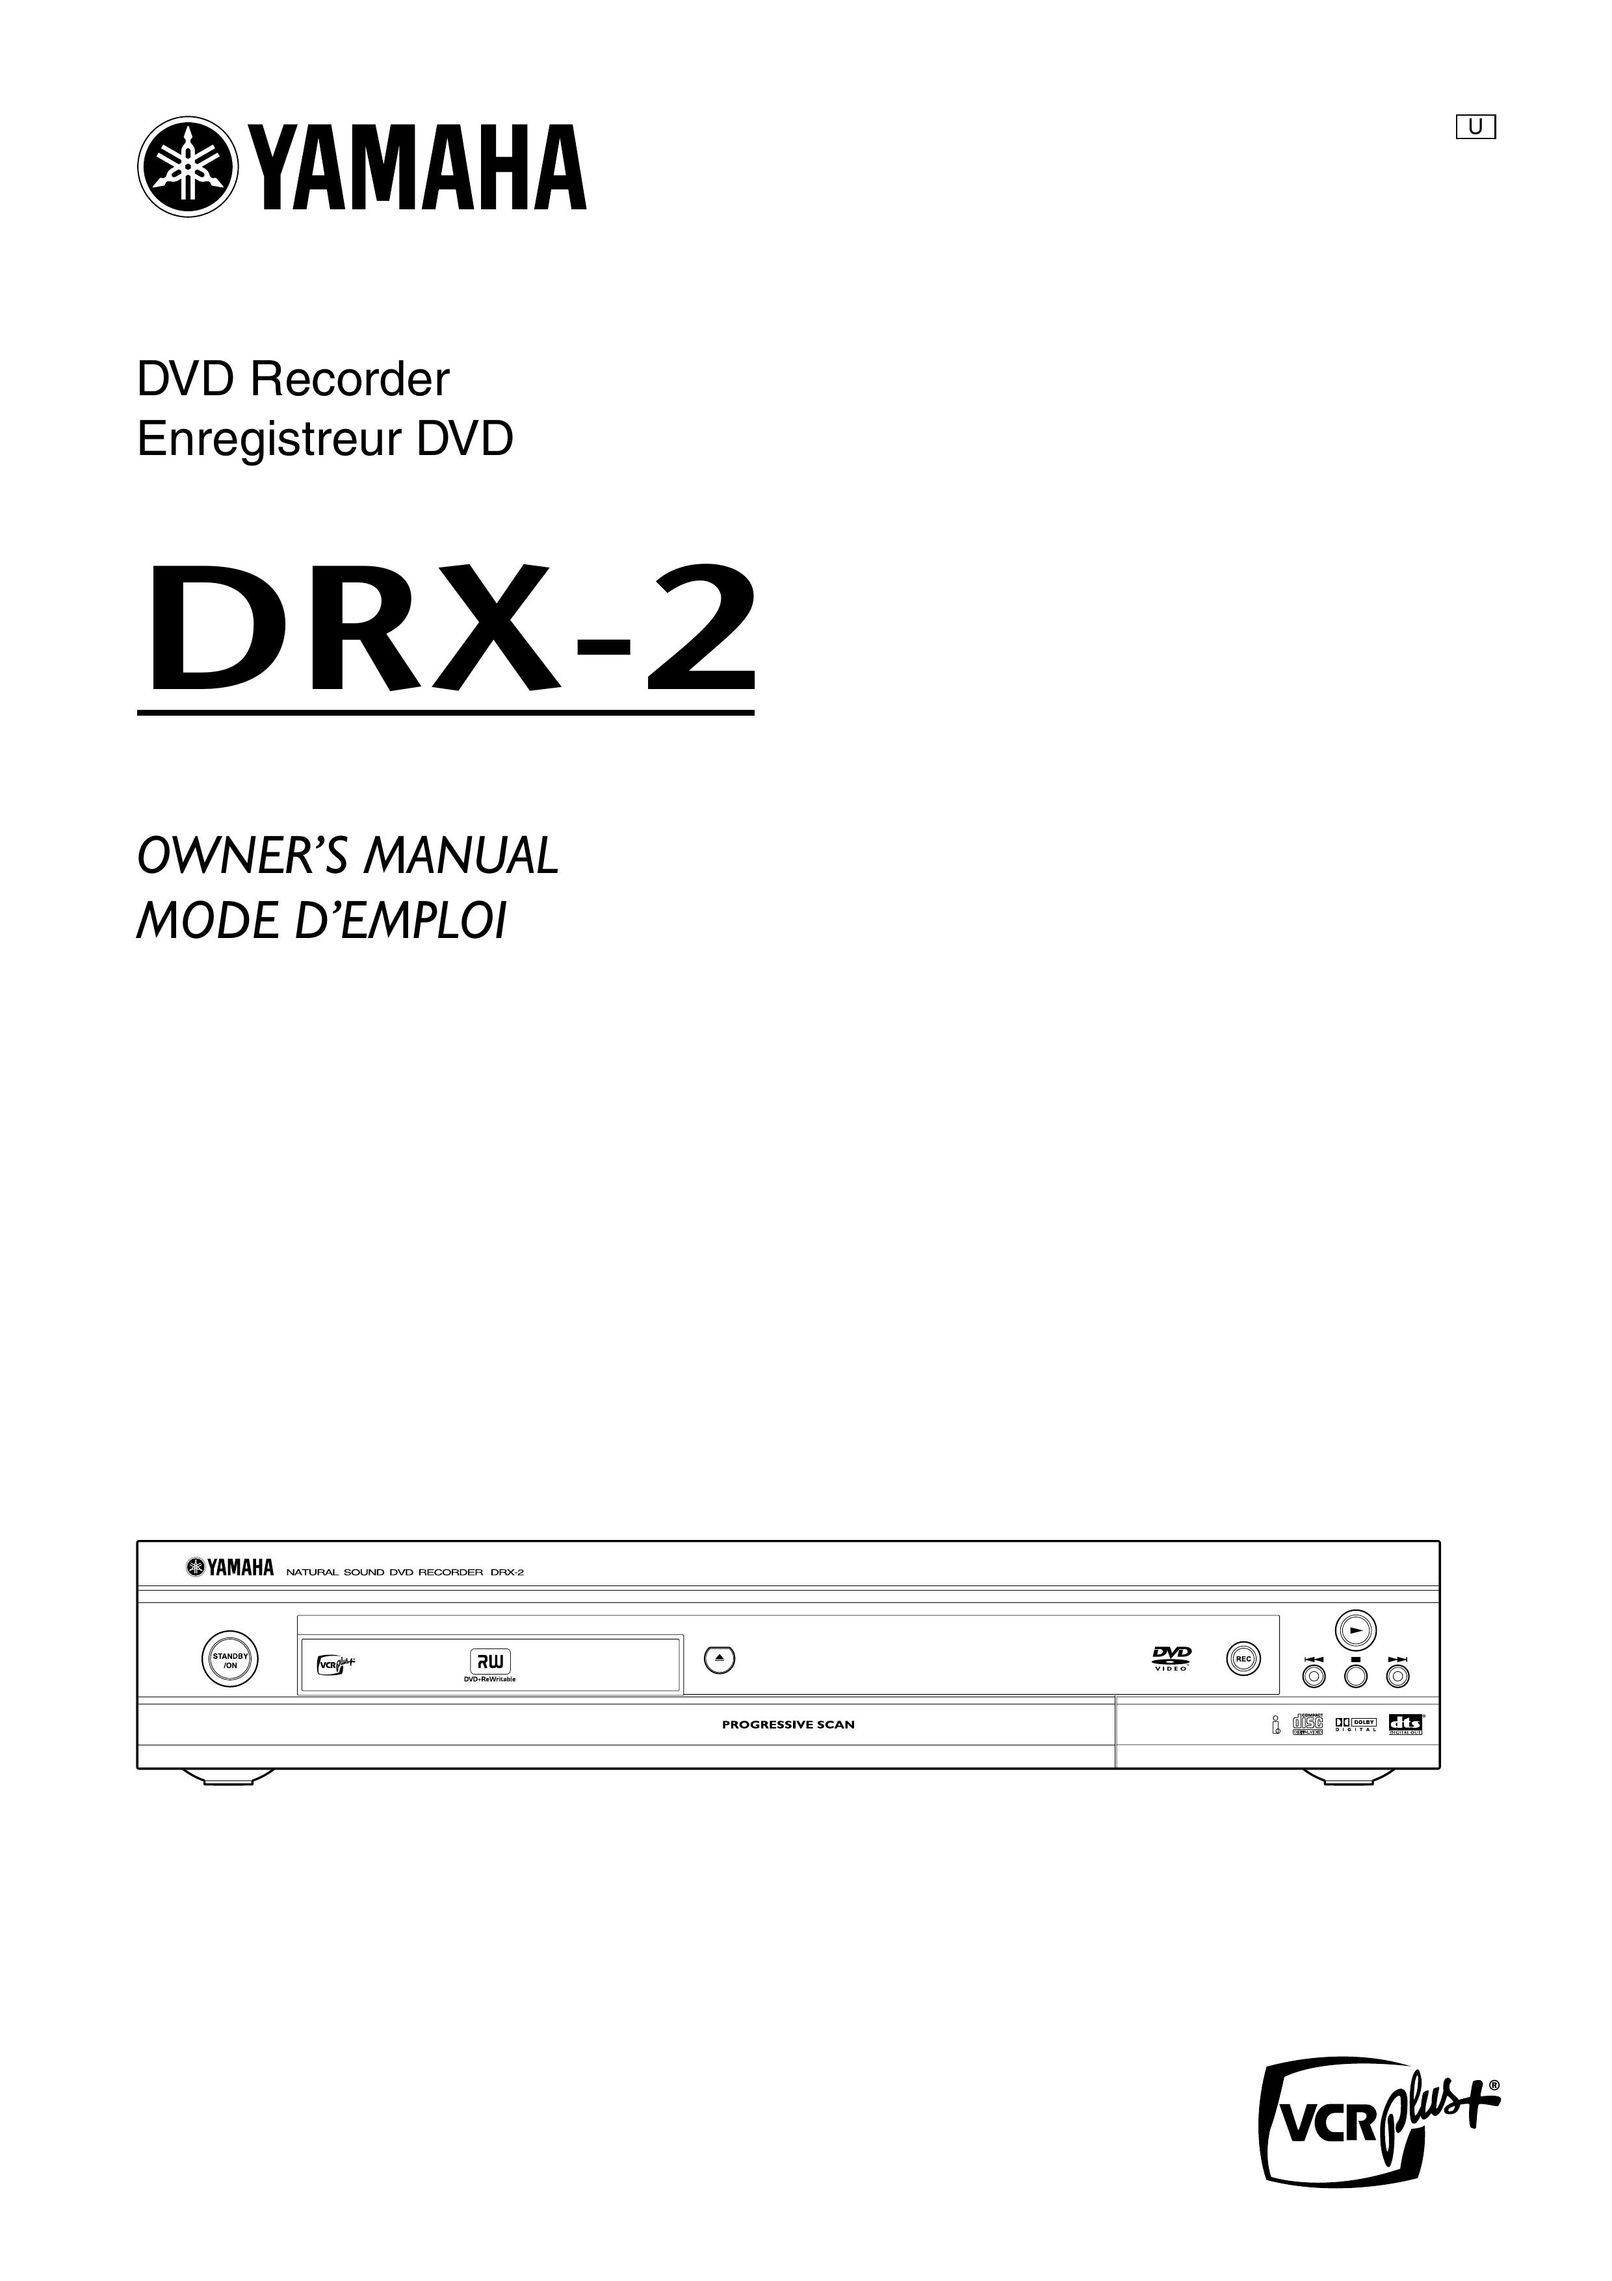 Yamaha DRX-2 DVD Recorder User Manual